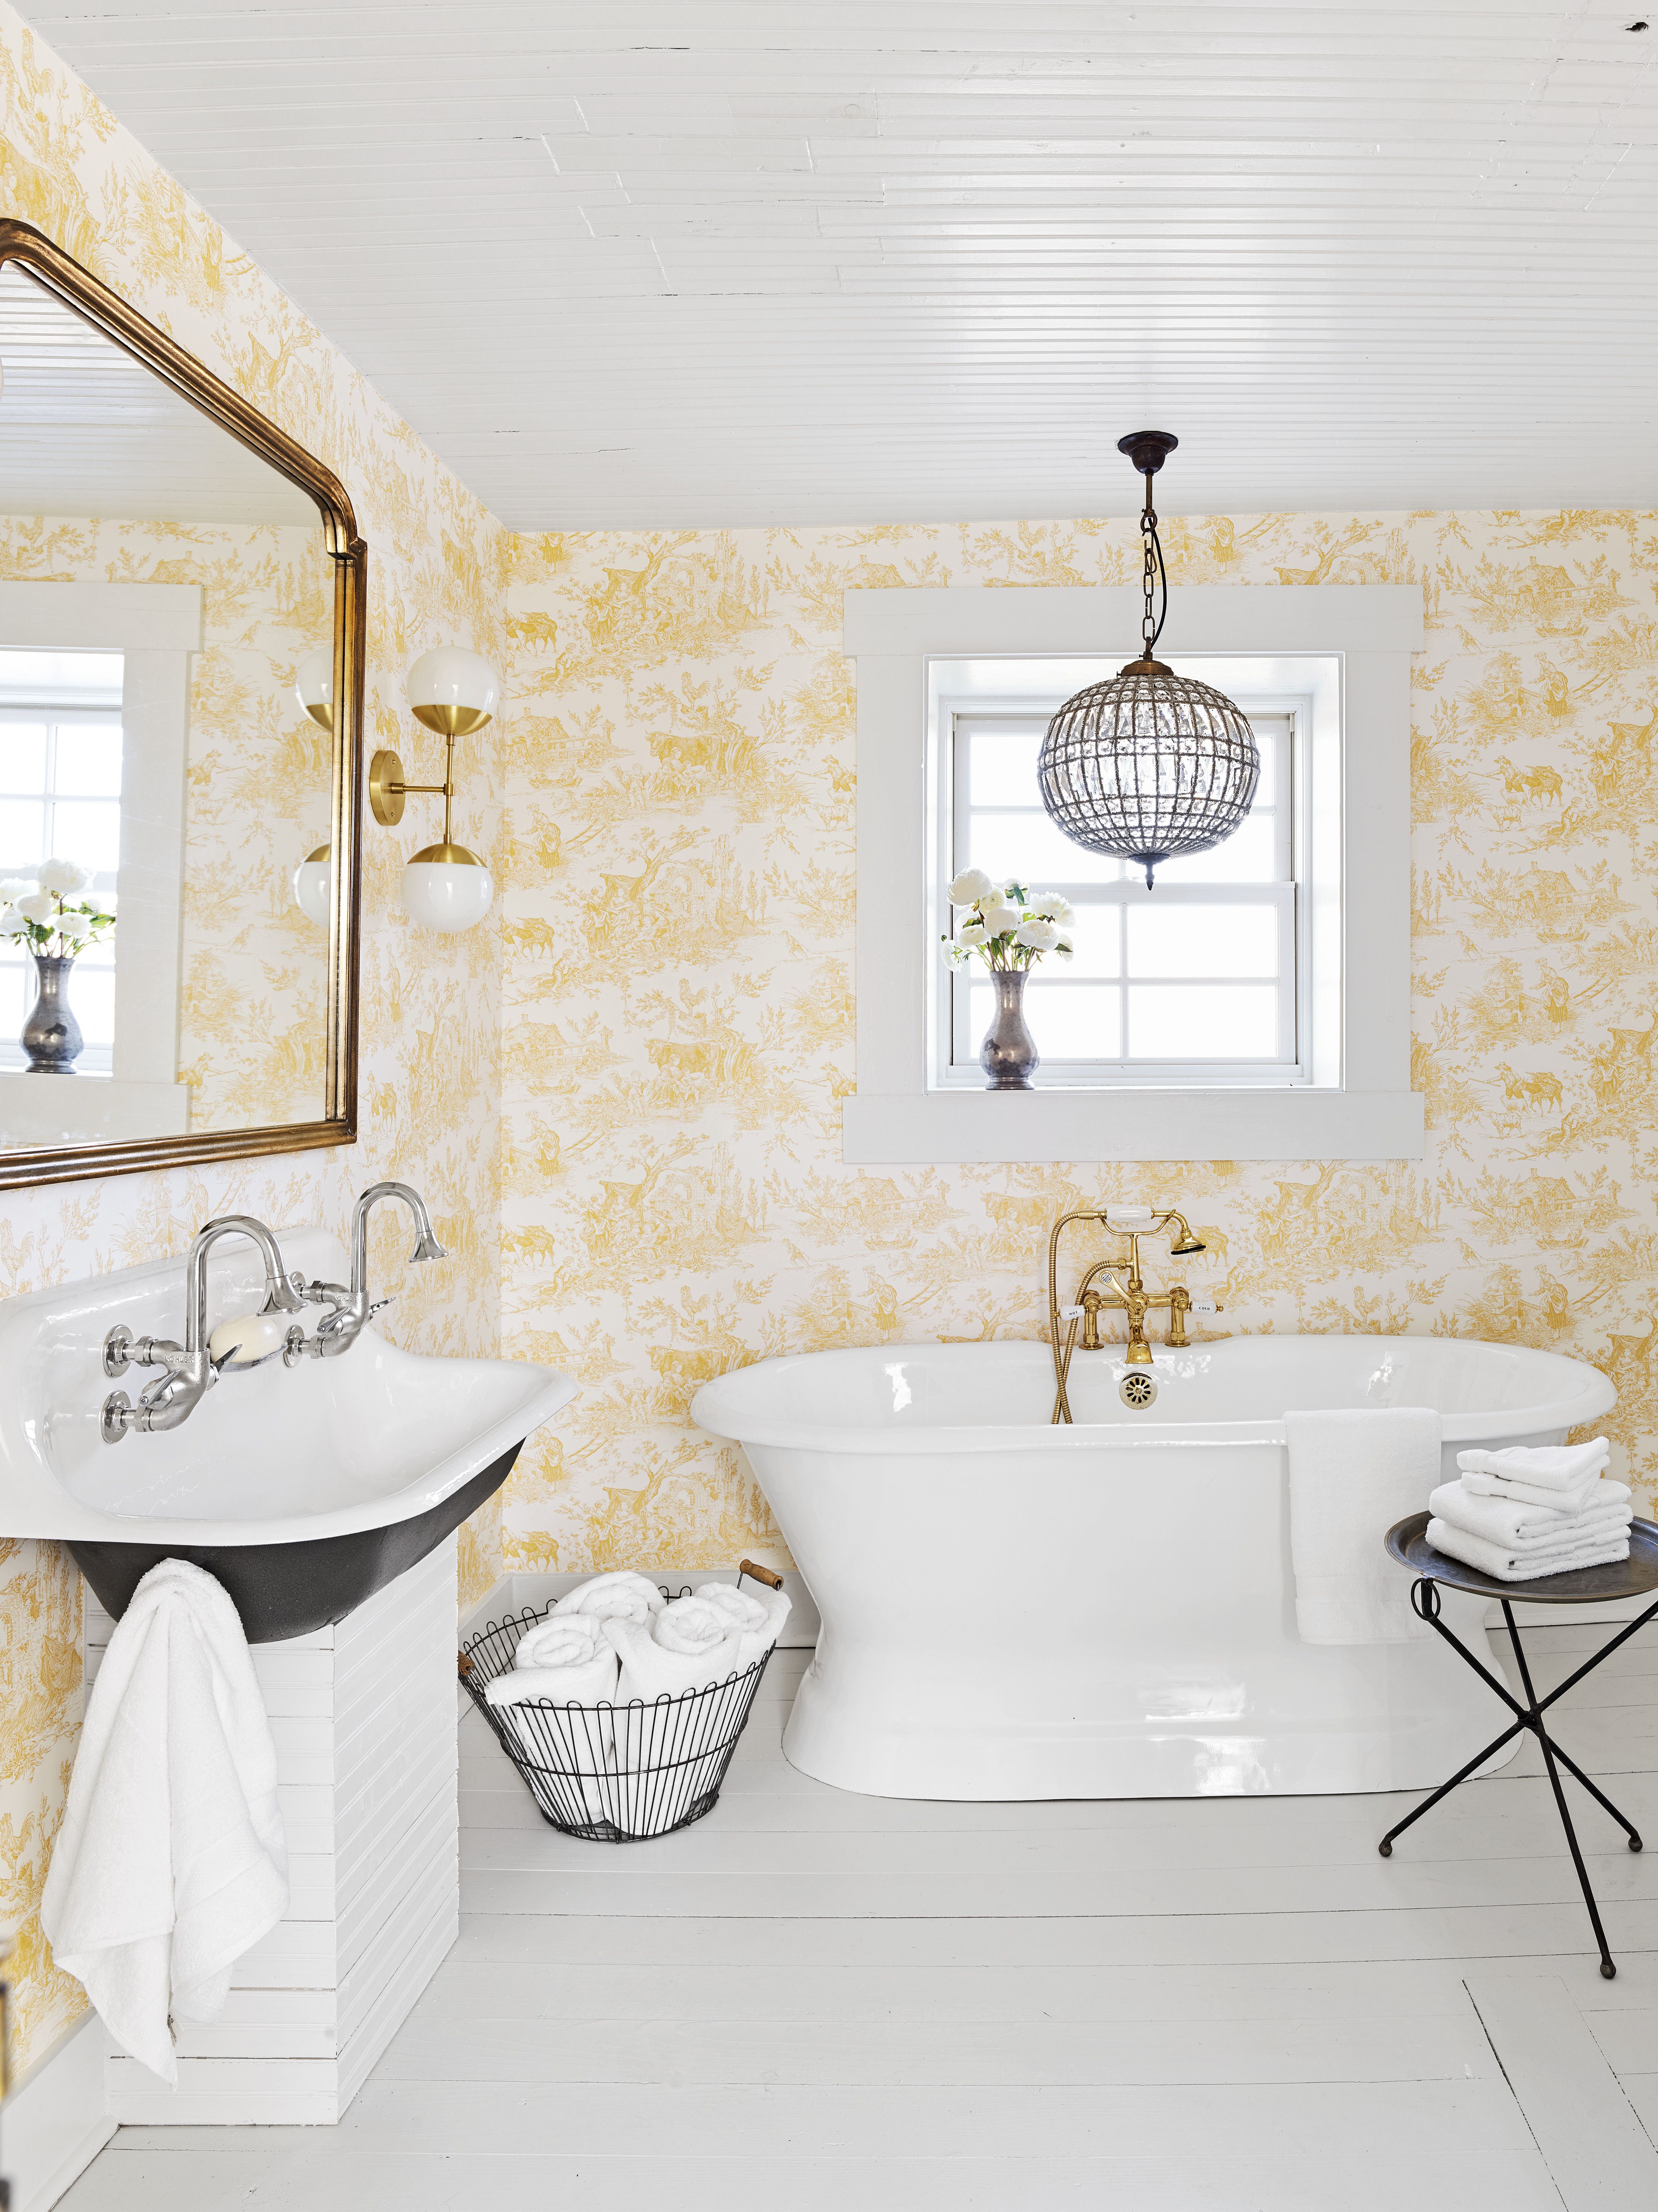 Free download Bathroom Wallpaper Ideas Best Wallpapers for Bathrooms ... - PSklaX